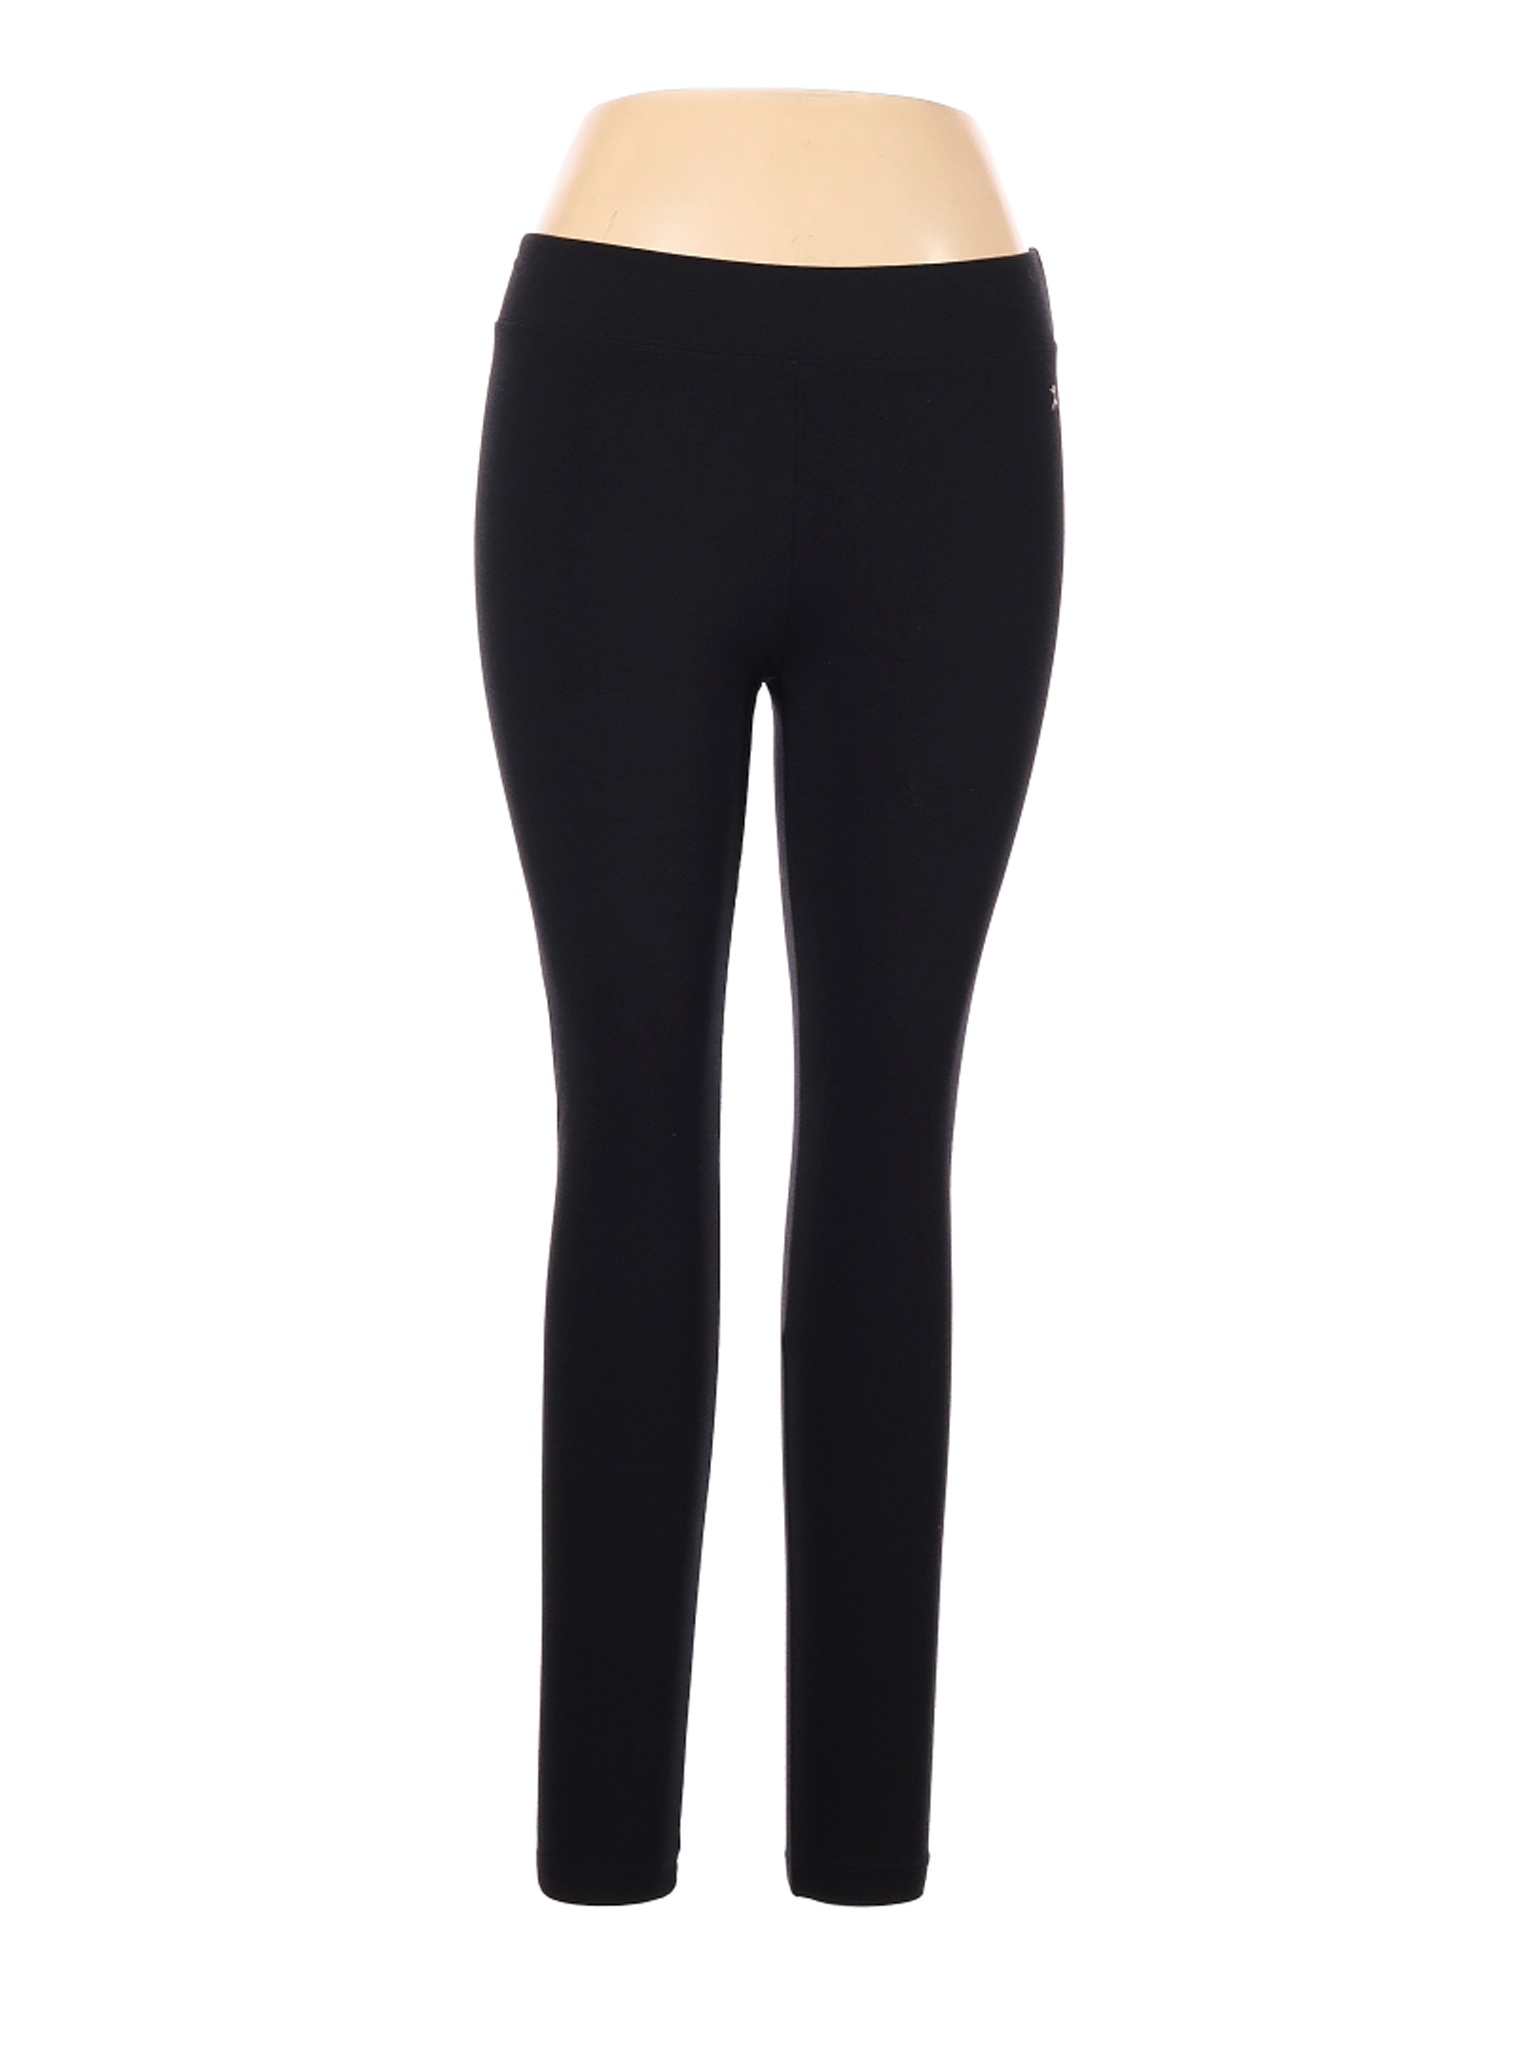 Danskin Women Black Active Pants L | eBay